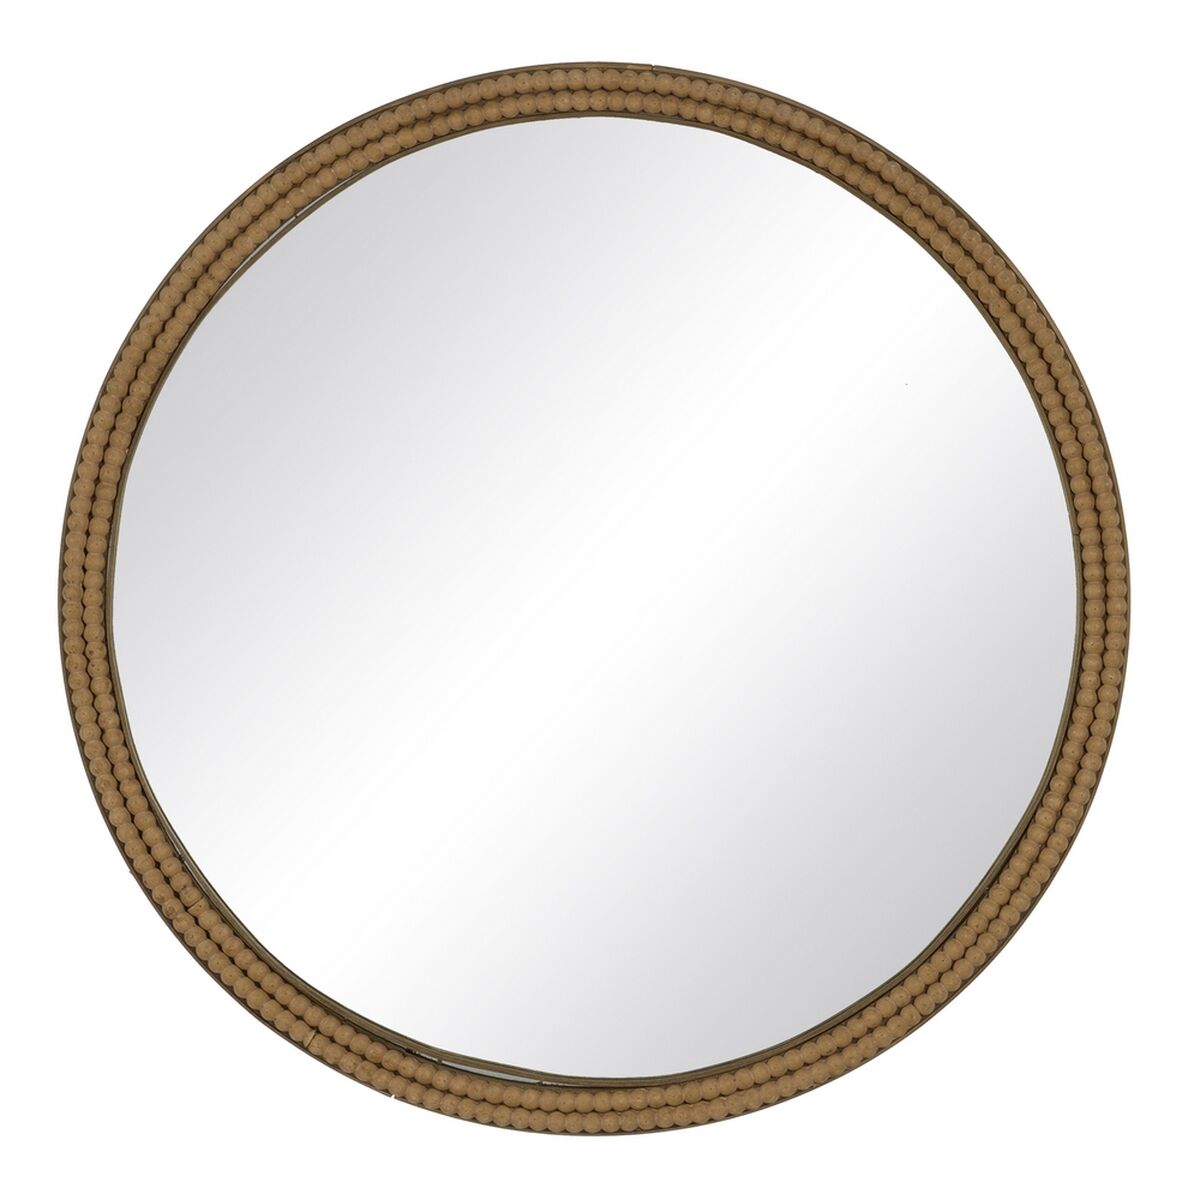 Увеличително Огледало x 2 16,5 x 8 cm (36 броя)